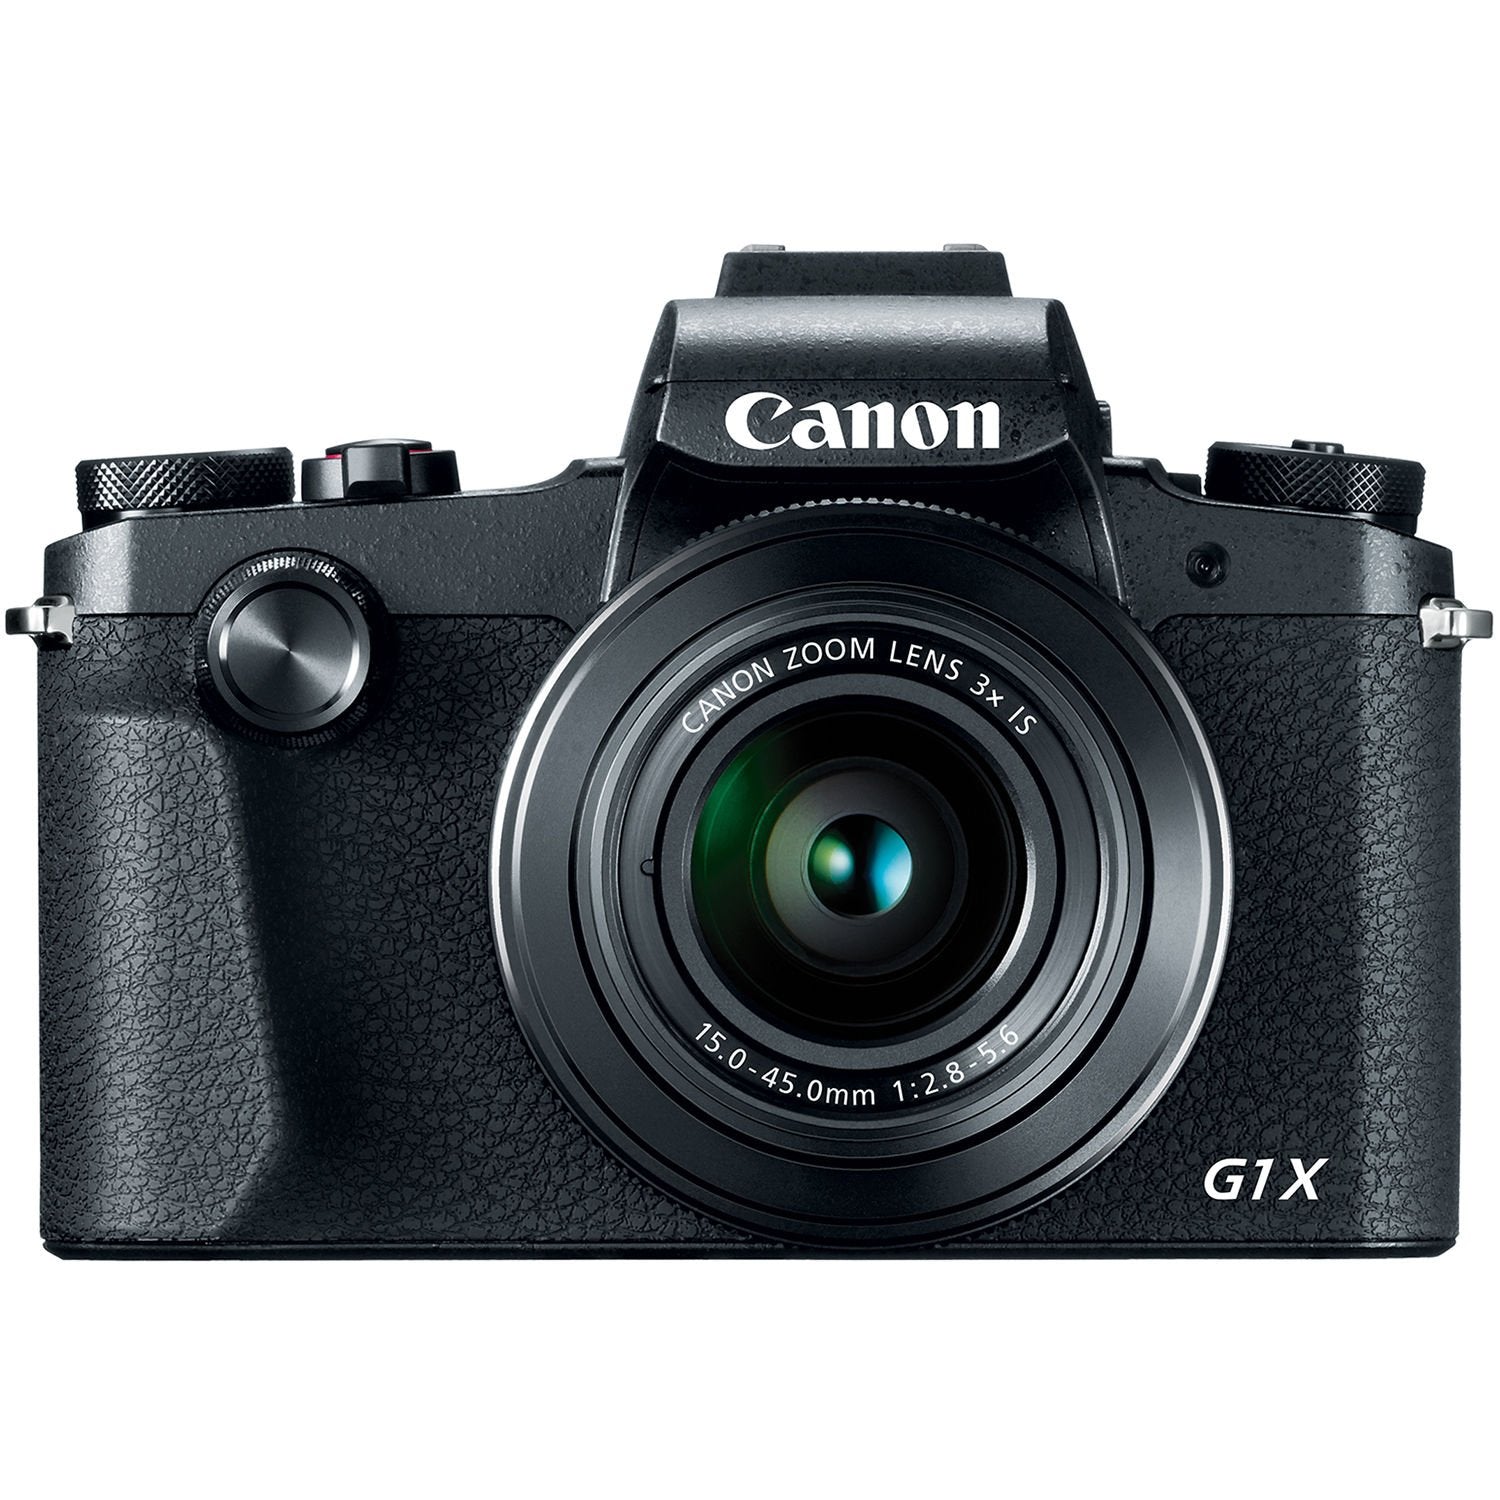 6Ave Canon PowerShot G1 X Mark III Digital Camera #2208C001 International Version (No Warranty) + Replacement Lithium Io